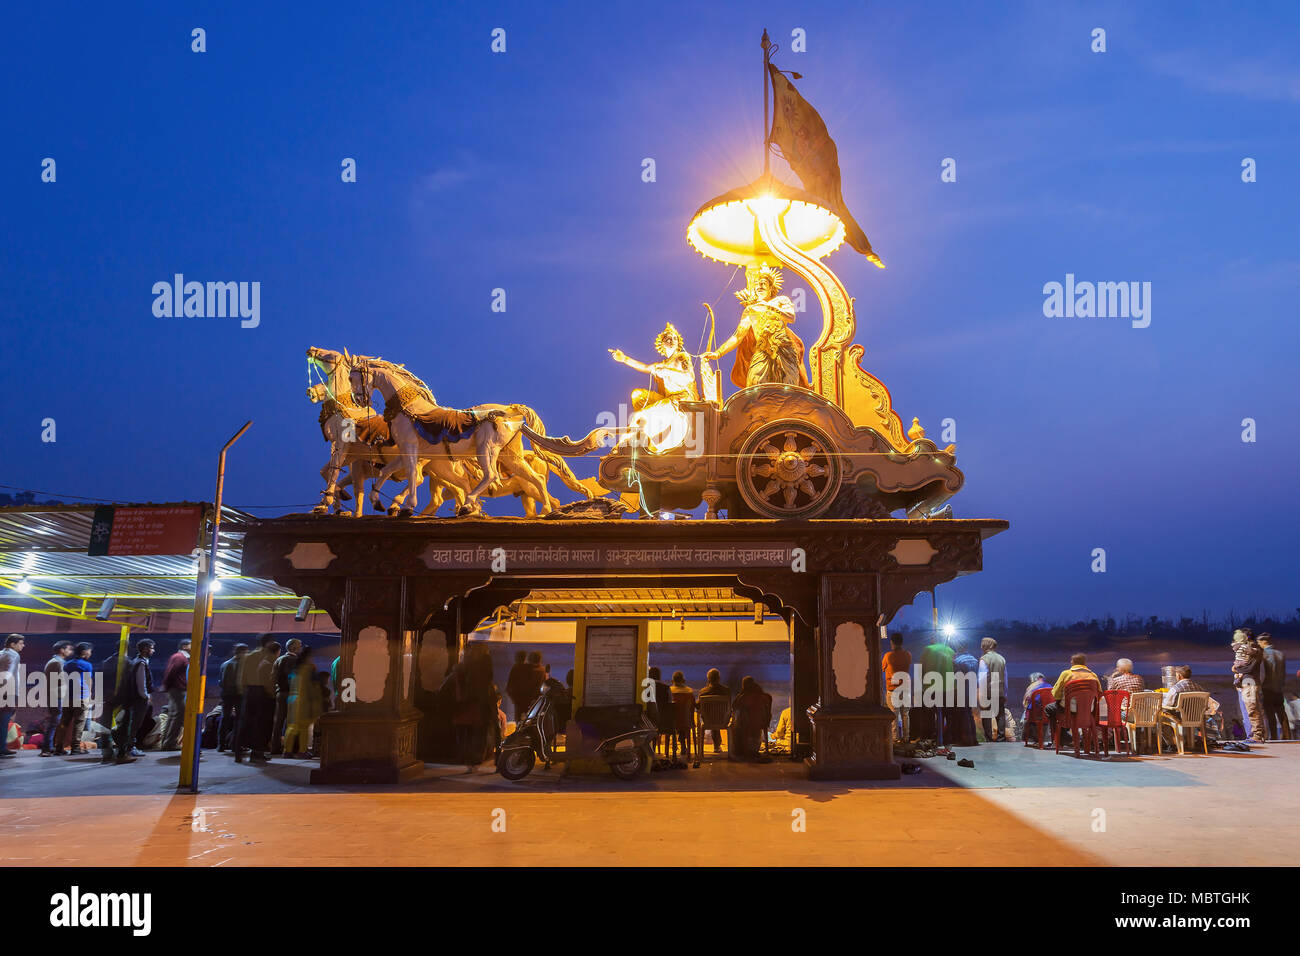 RISHIKESH, INDIA - NOVEMBER 08, 2015: A statue of the Hindu god Krishna and his devotee Arjuna in Rishikesh at night, North India. Stock Photo